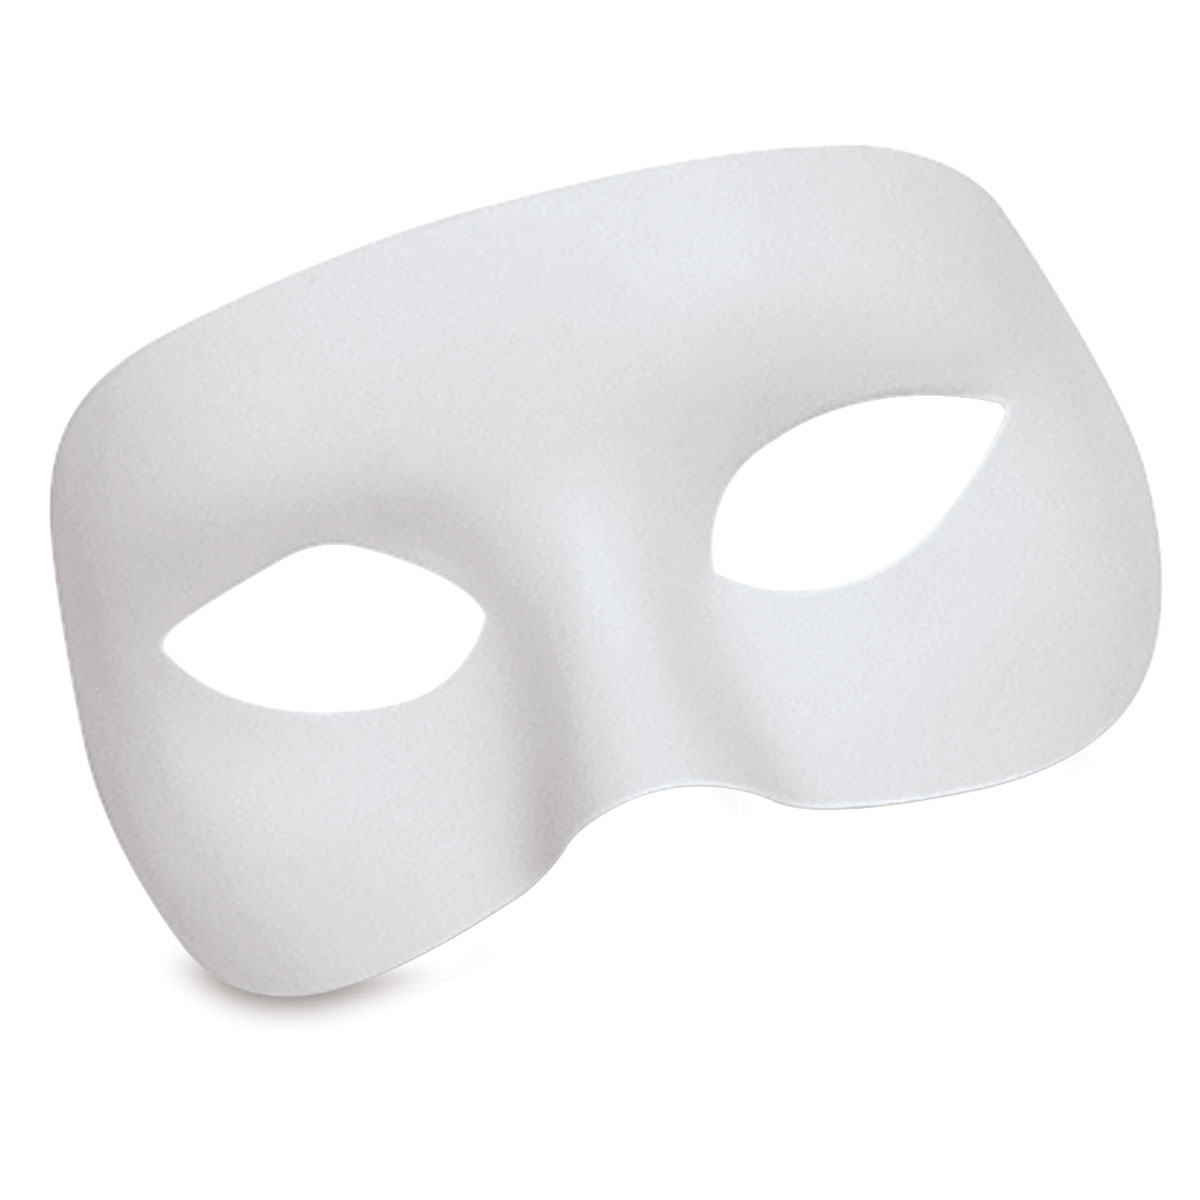 Creativity Street Plastic Face Mask - Male